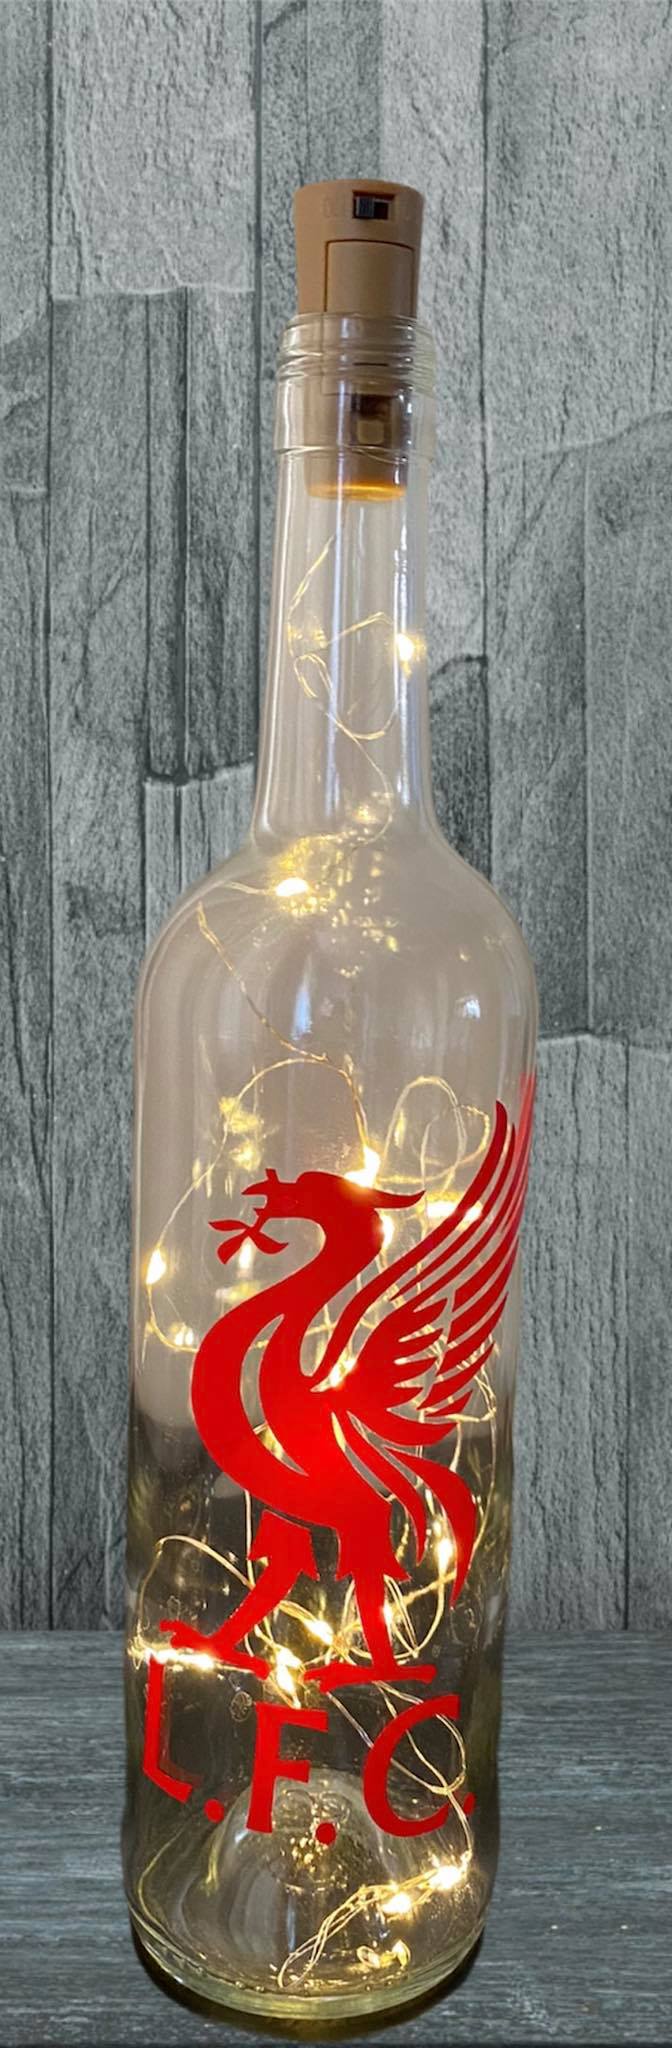 Liverpool Light Up Bottle